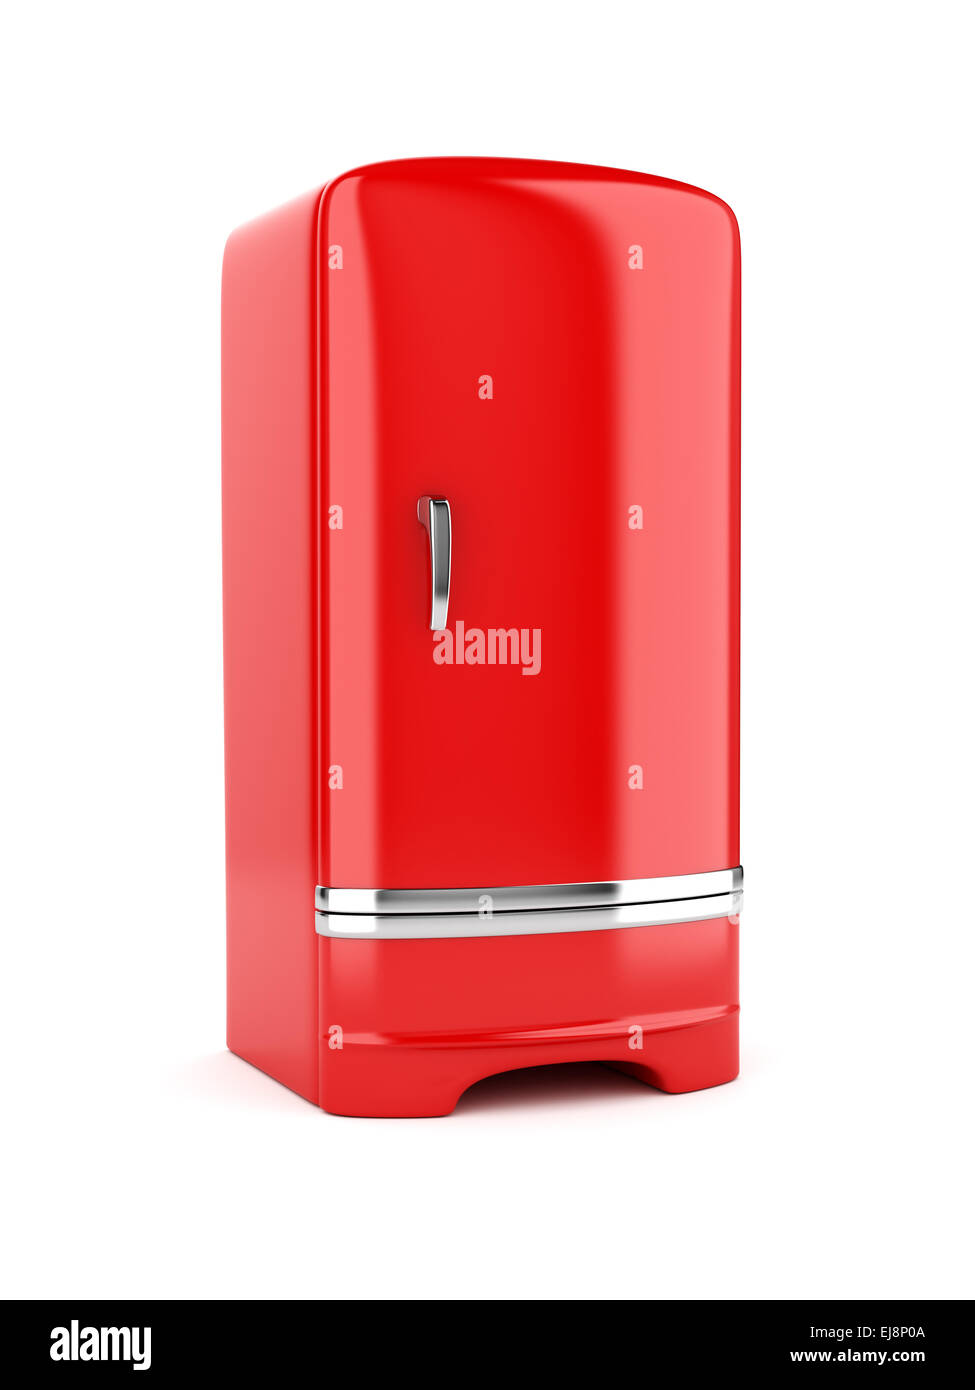 Retro red fridge refrigerator isolated hi-res stock photography